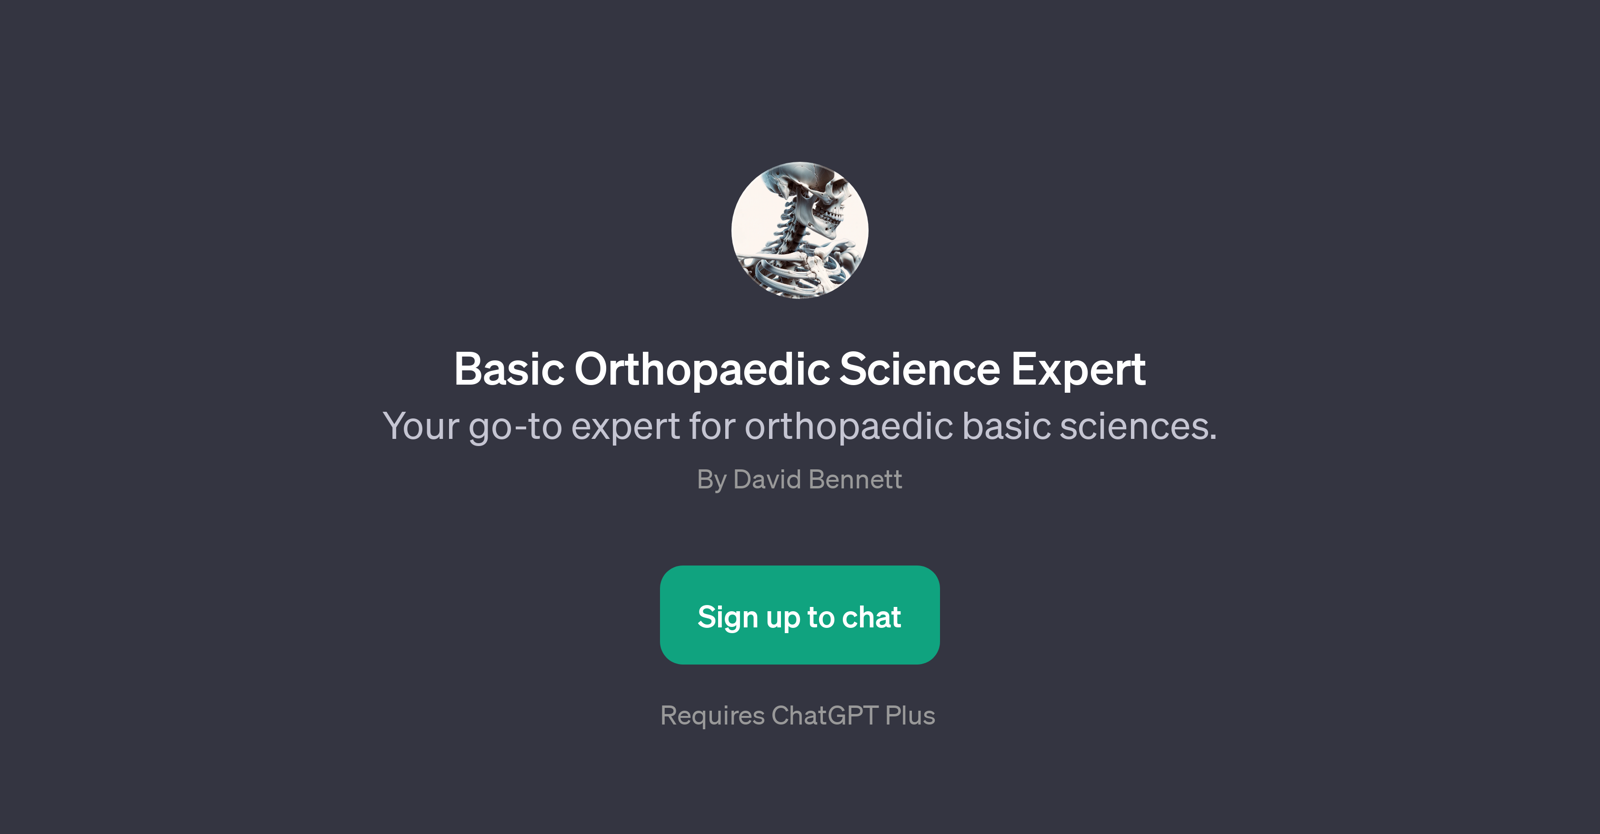 Basic Orthopaedic Science Expert website